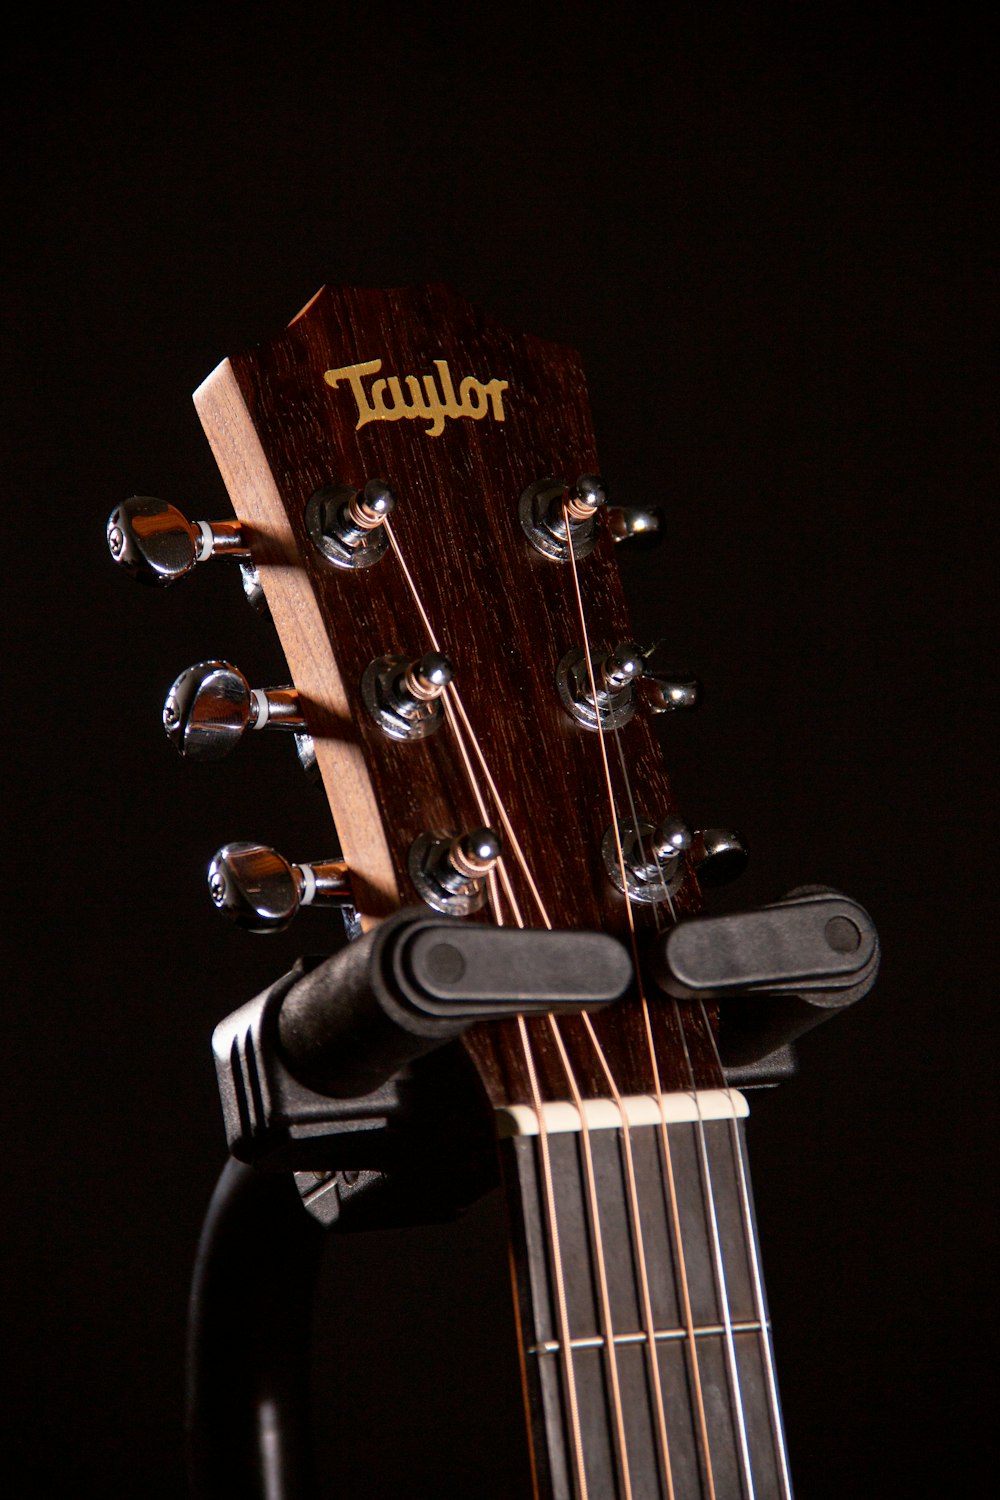 headstock de guitarra Taylor marrom e preto